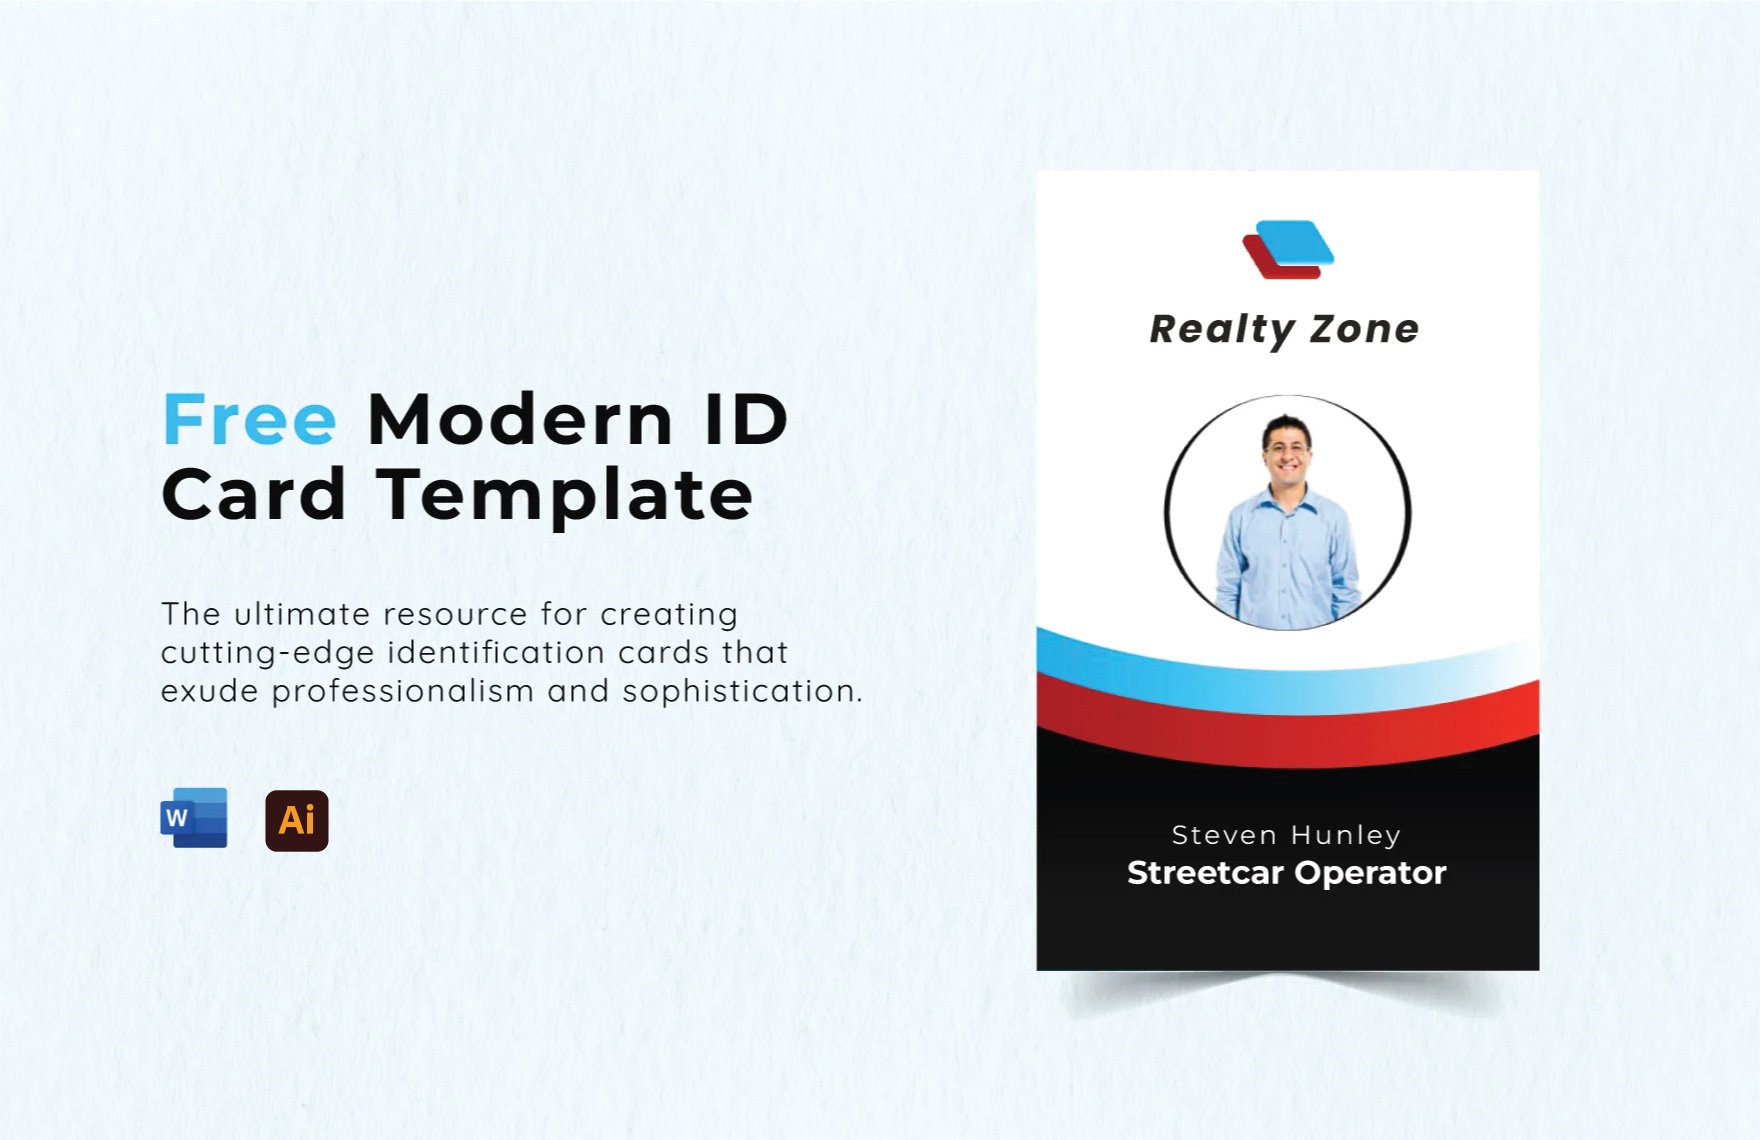 Free Modern ID Card Template